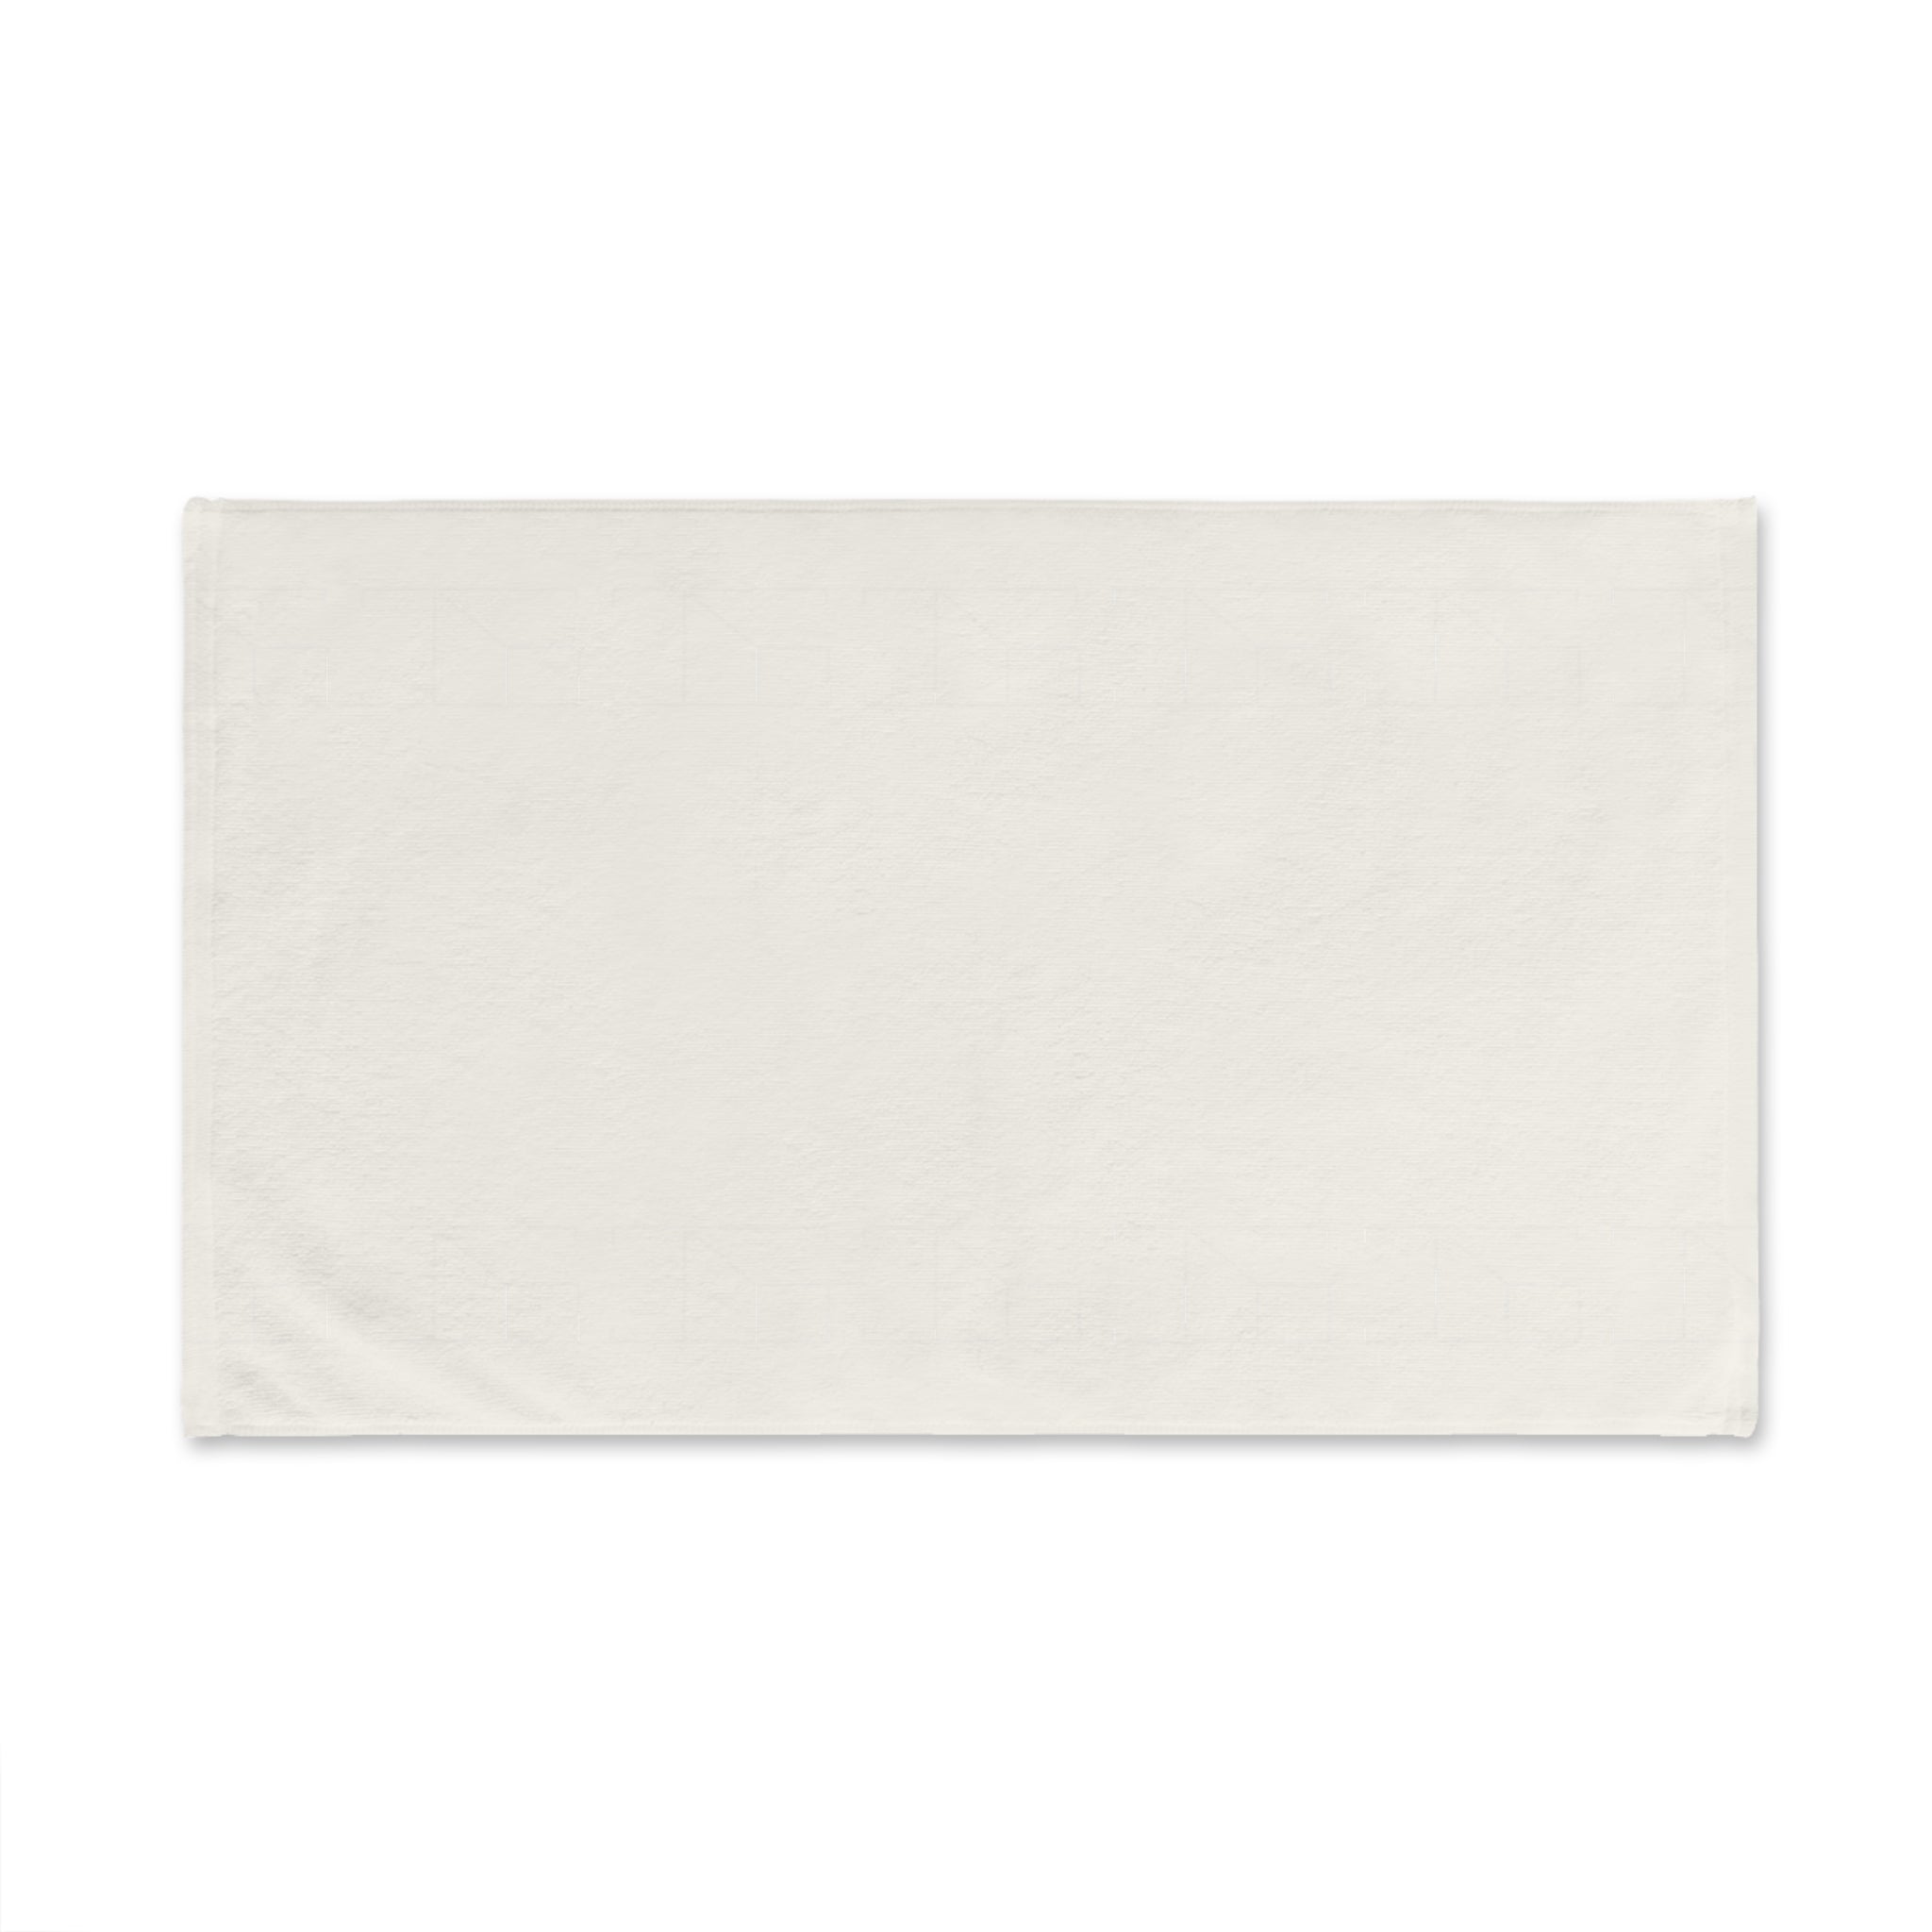 Hand Towel - Bone White